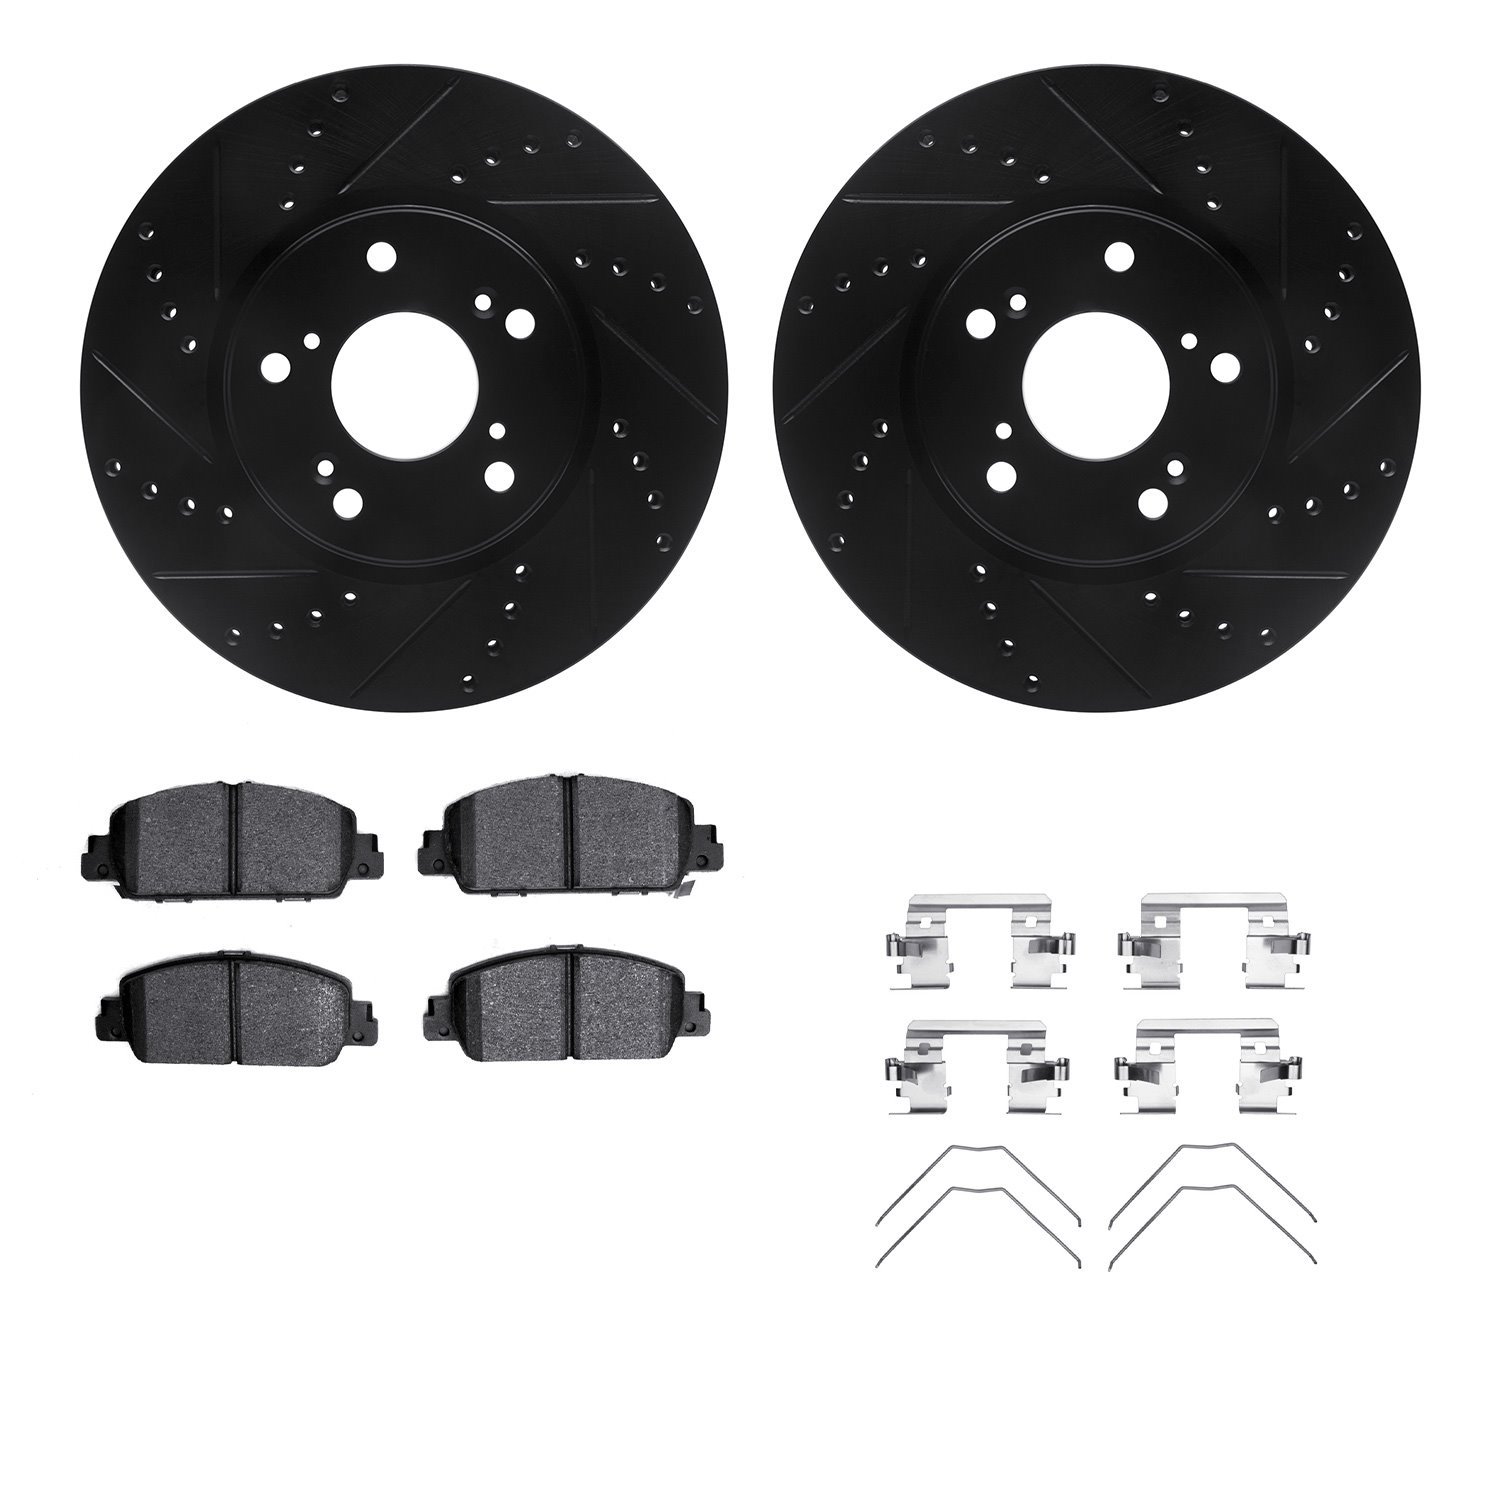 8312-59097 Drilled/Slotted Brake Rotors with 3000-Series Ceramic Brake Pads Kit & Hardware [Black], Fits Select Acura/Honda, Pos